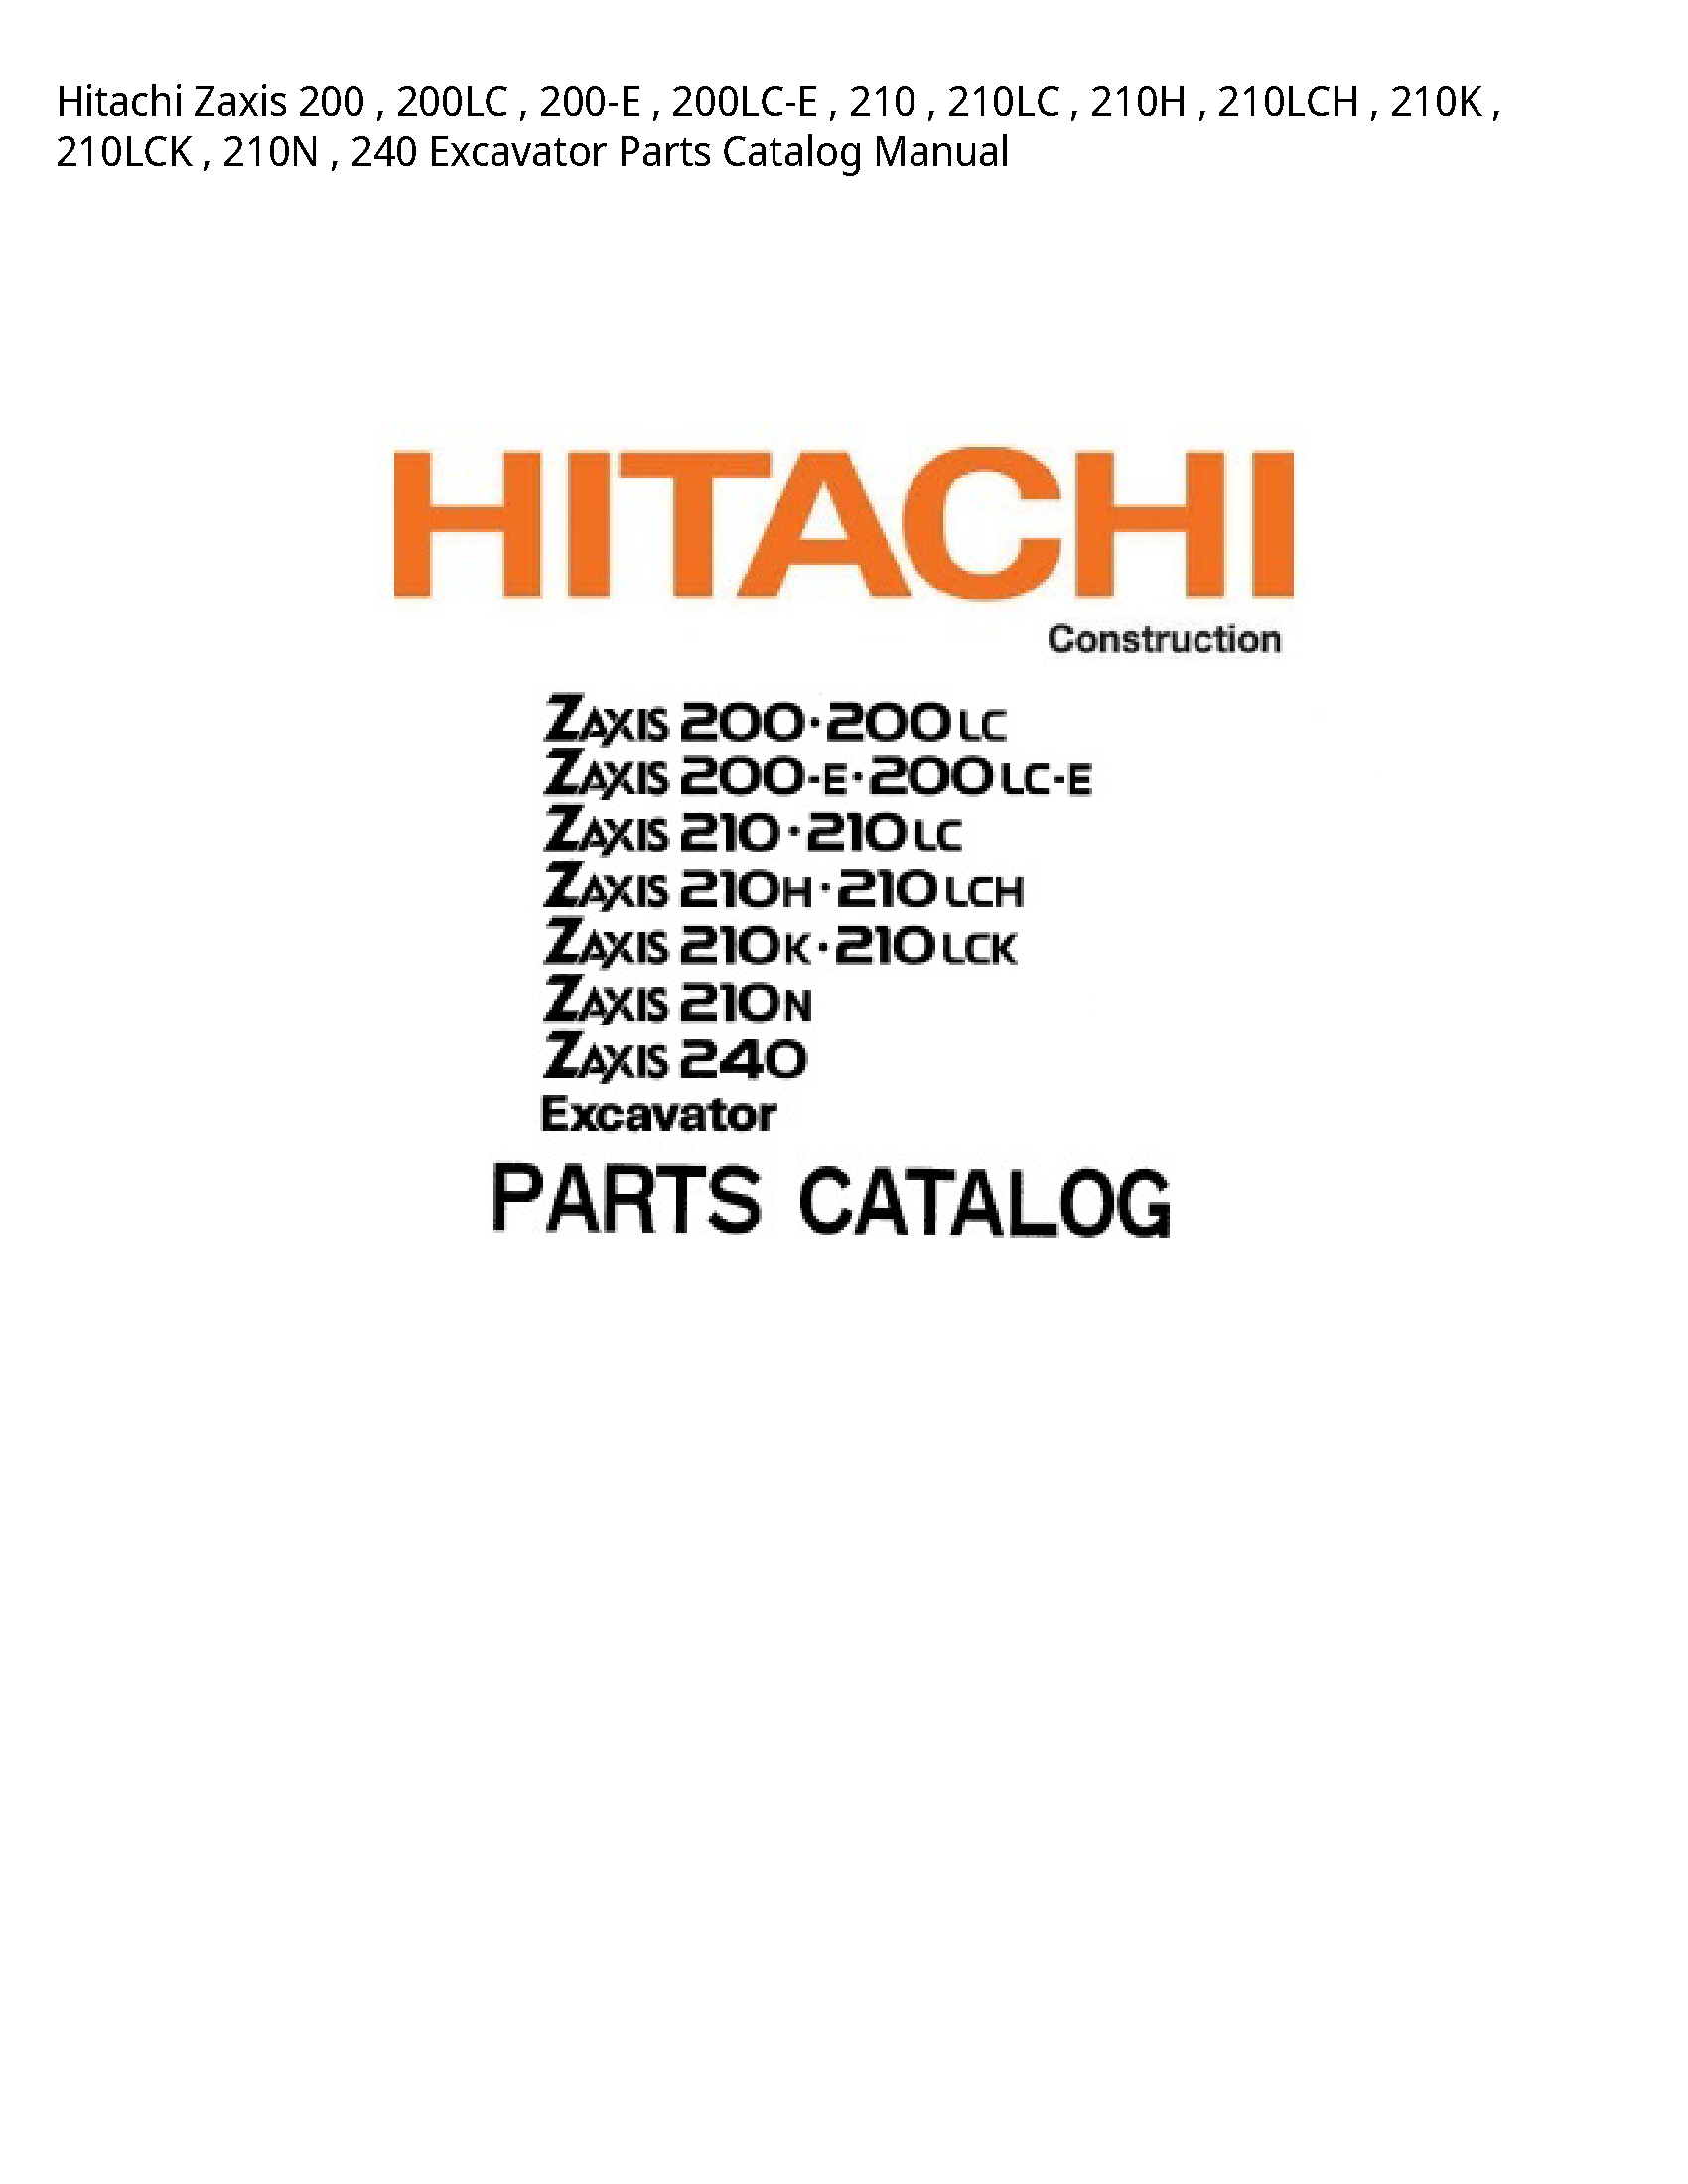 Hitachi 200 Zaxis Excavator Parts Catalog manual